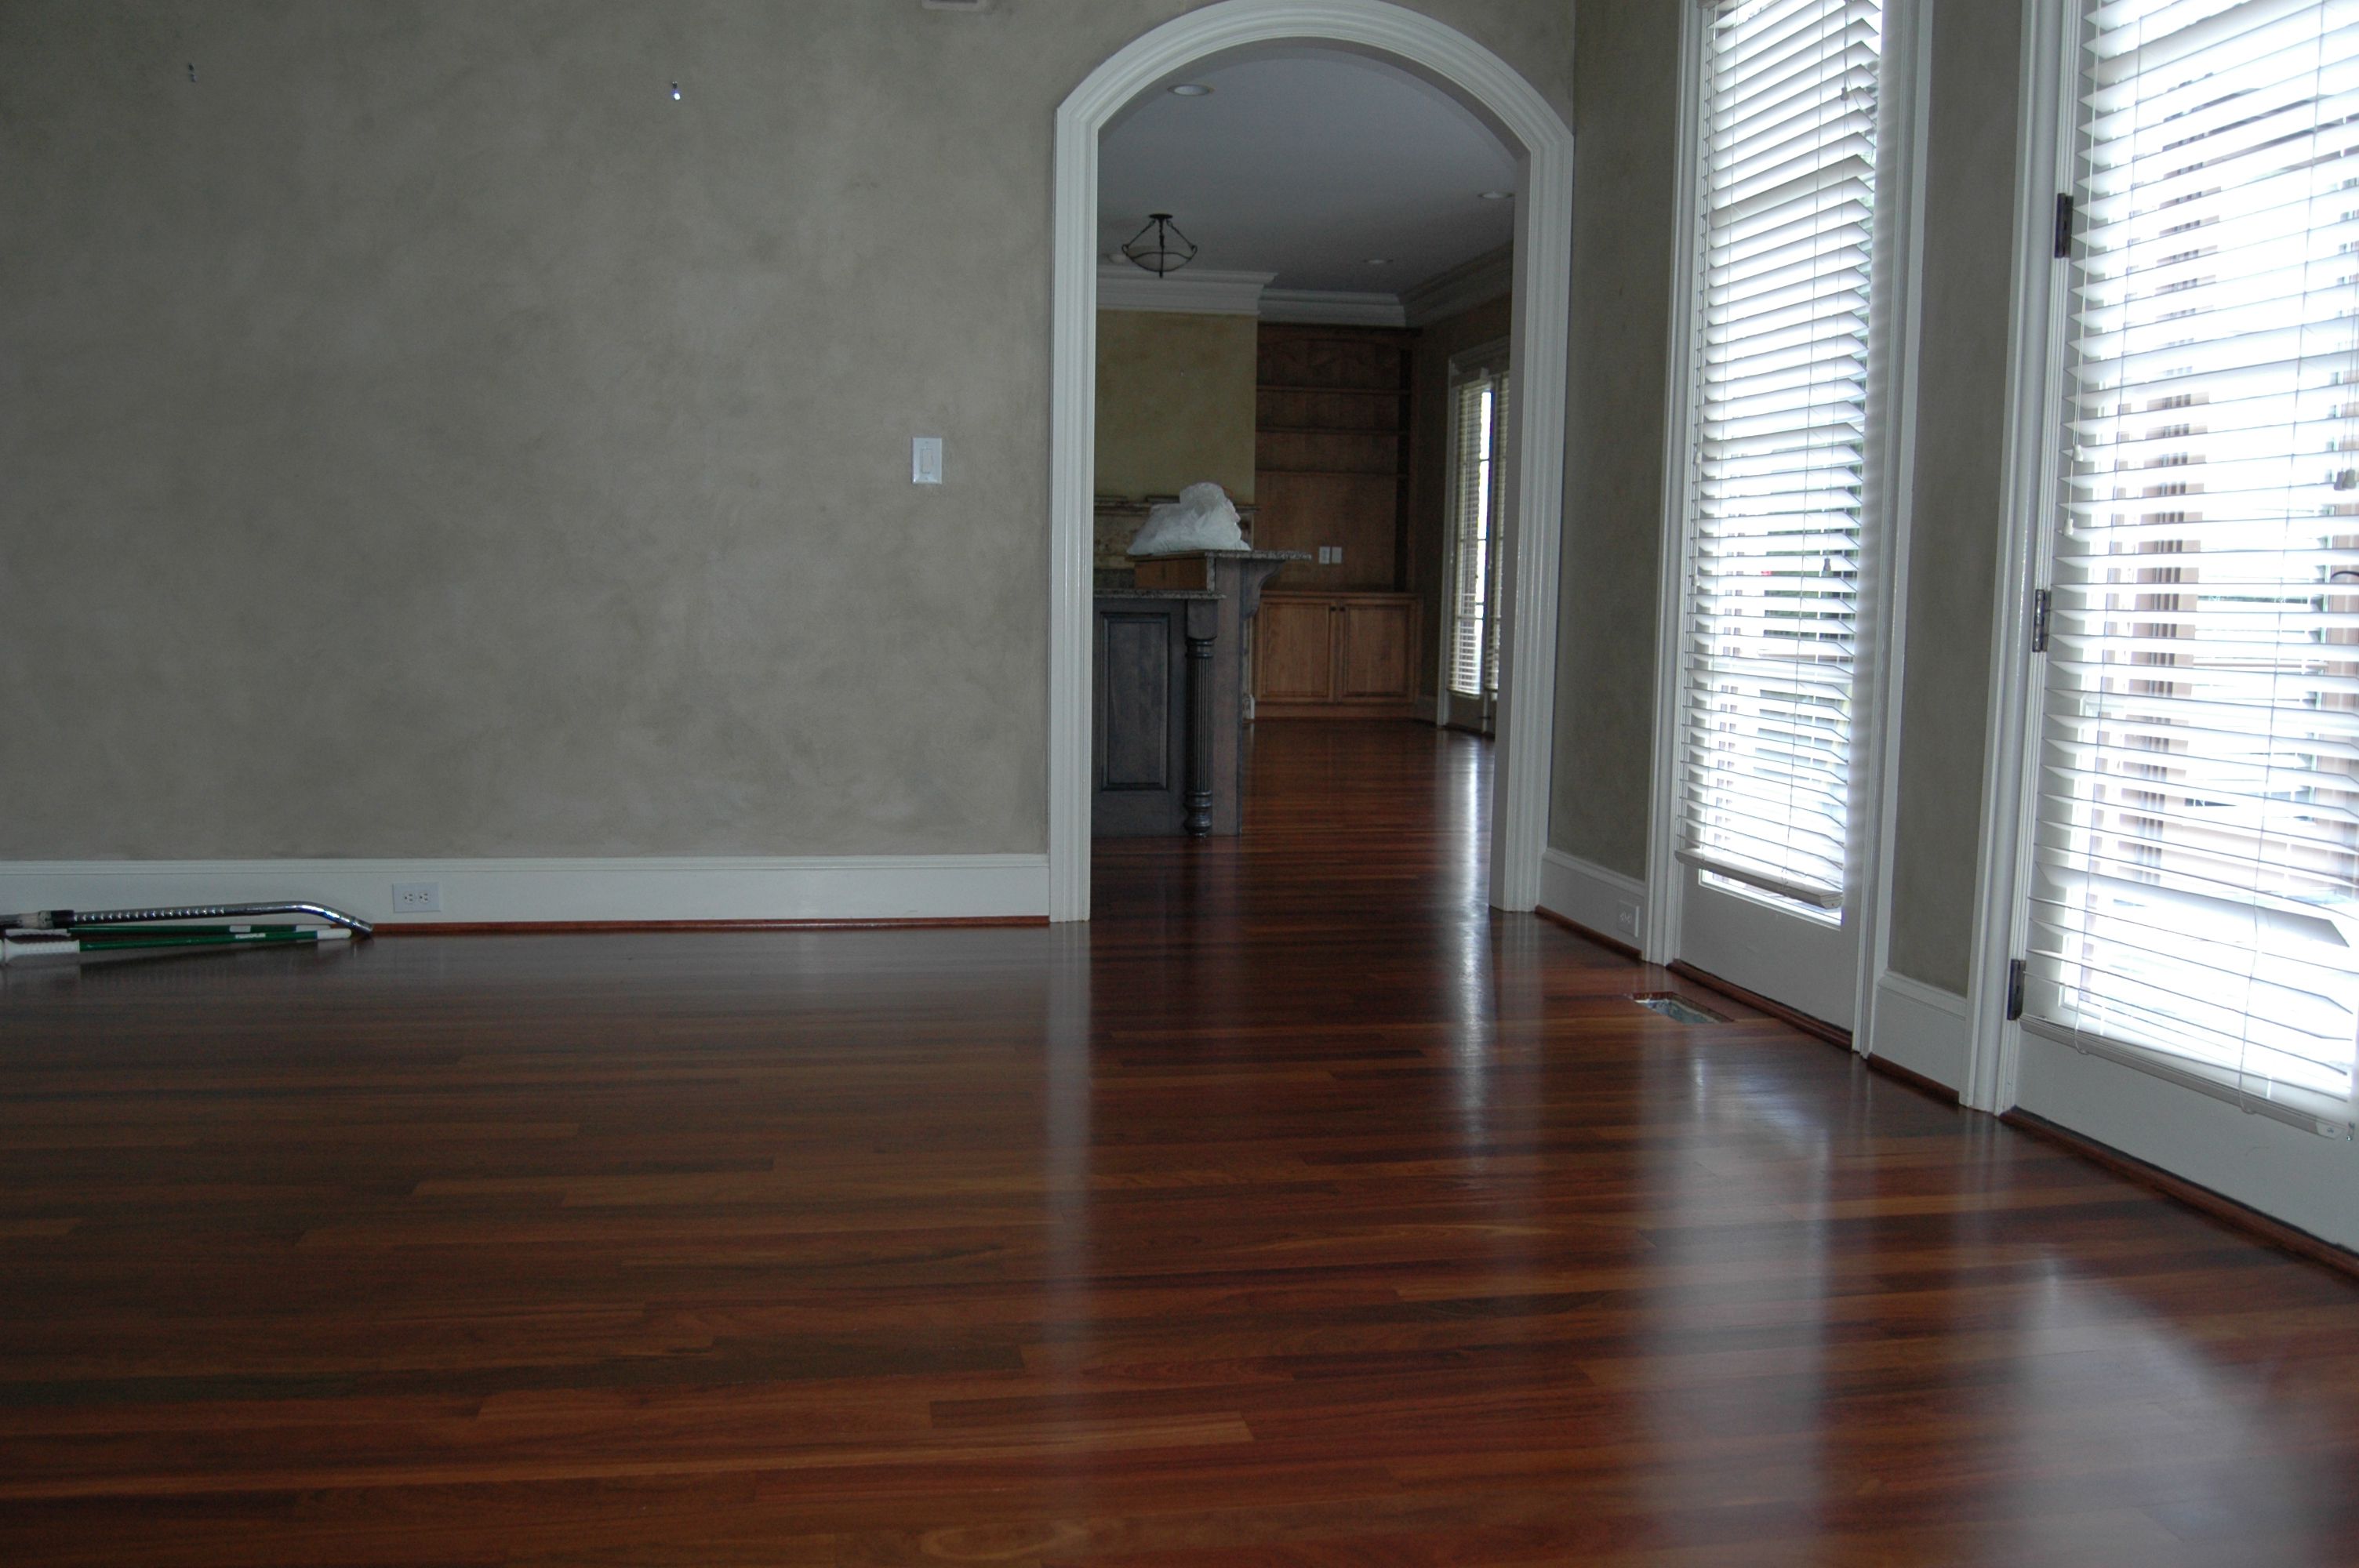 new hardwood floor ideas amazing design of the living room areas with dark hardwood floors ideas COPSUEY